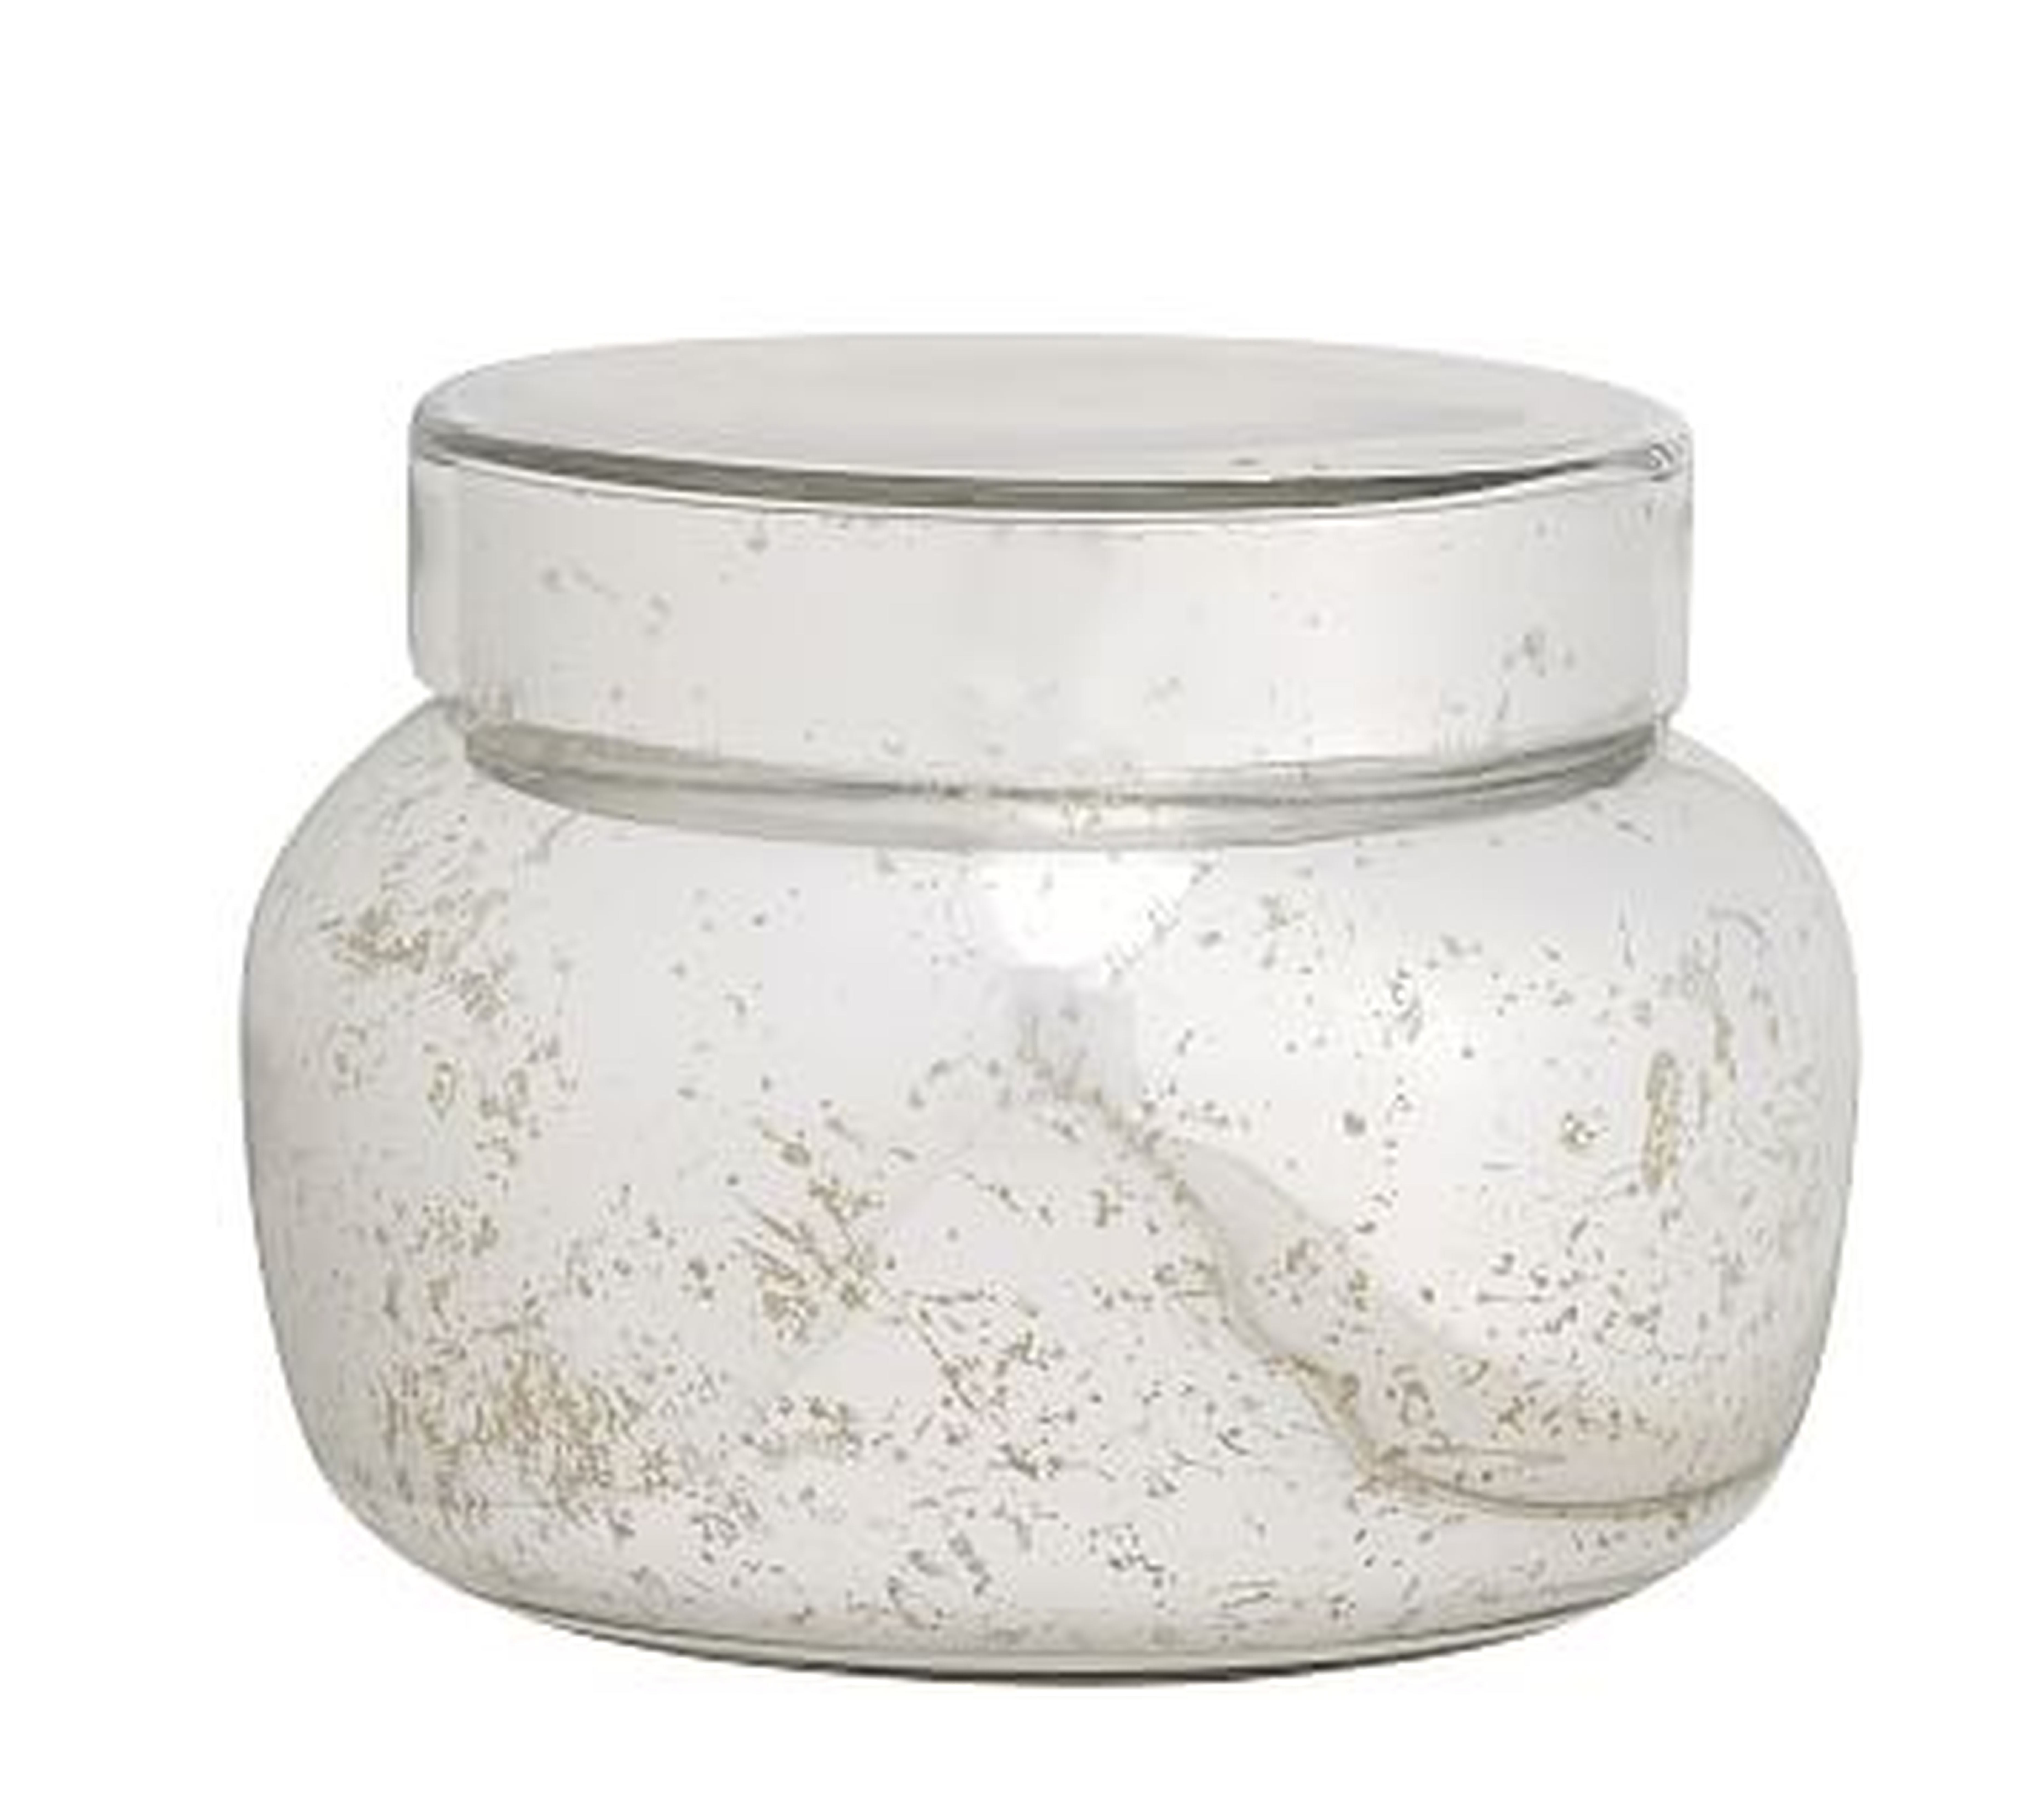 Mercury Glass Scented Candle - Neroli Jasmine, Silver, Large - Pottery Barn